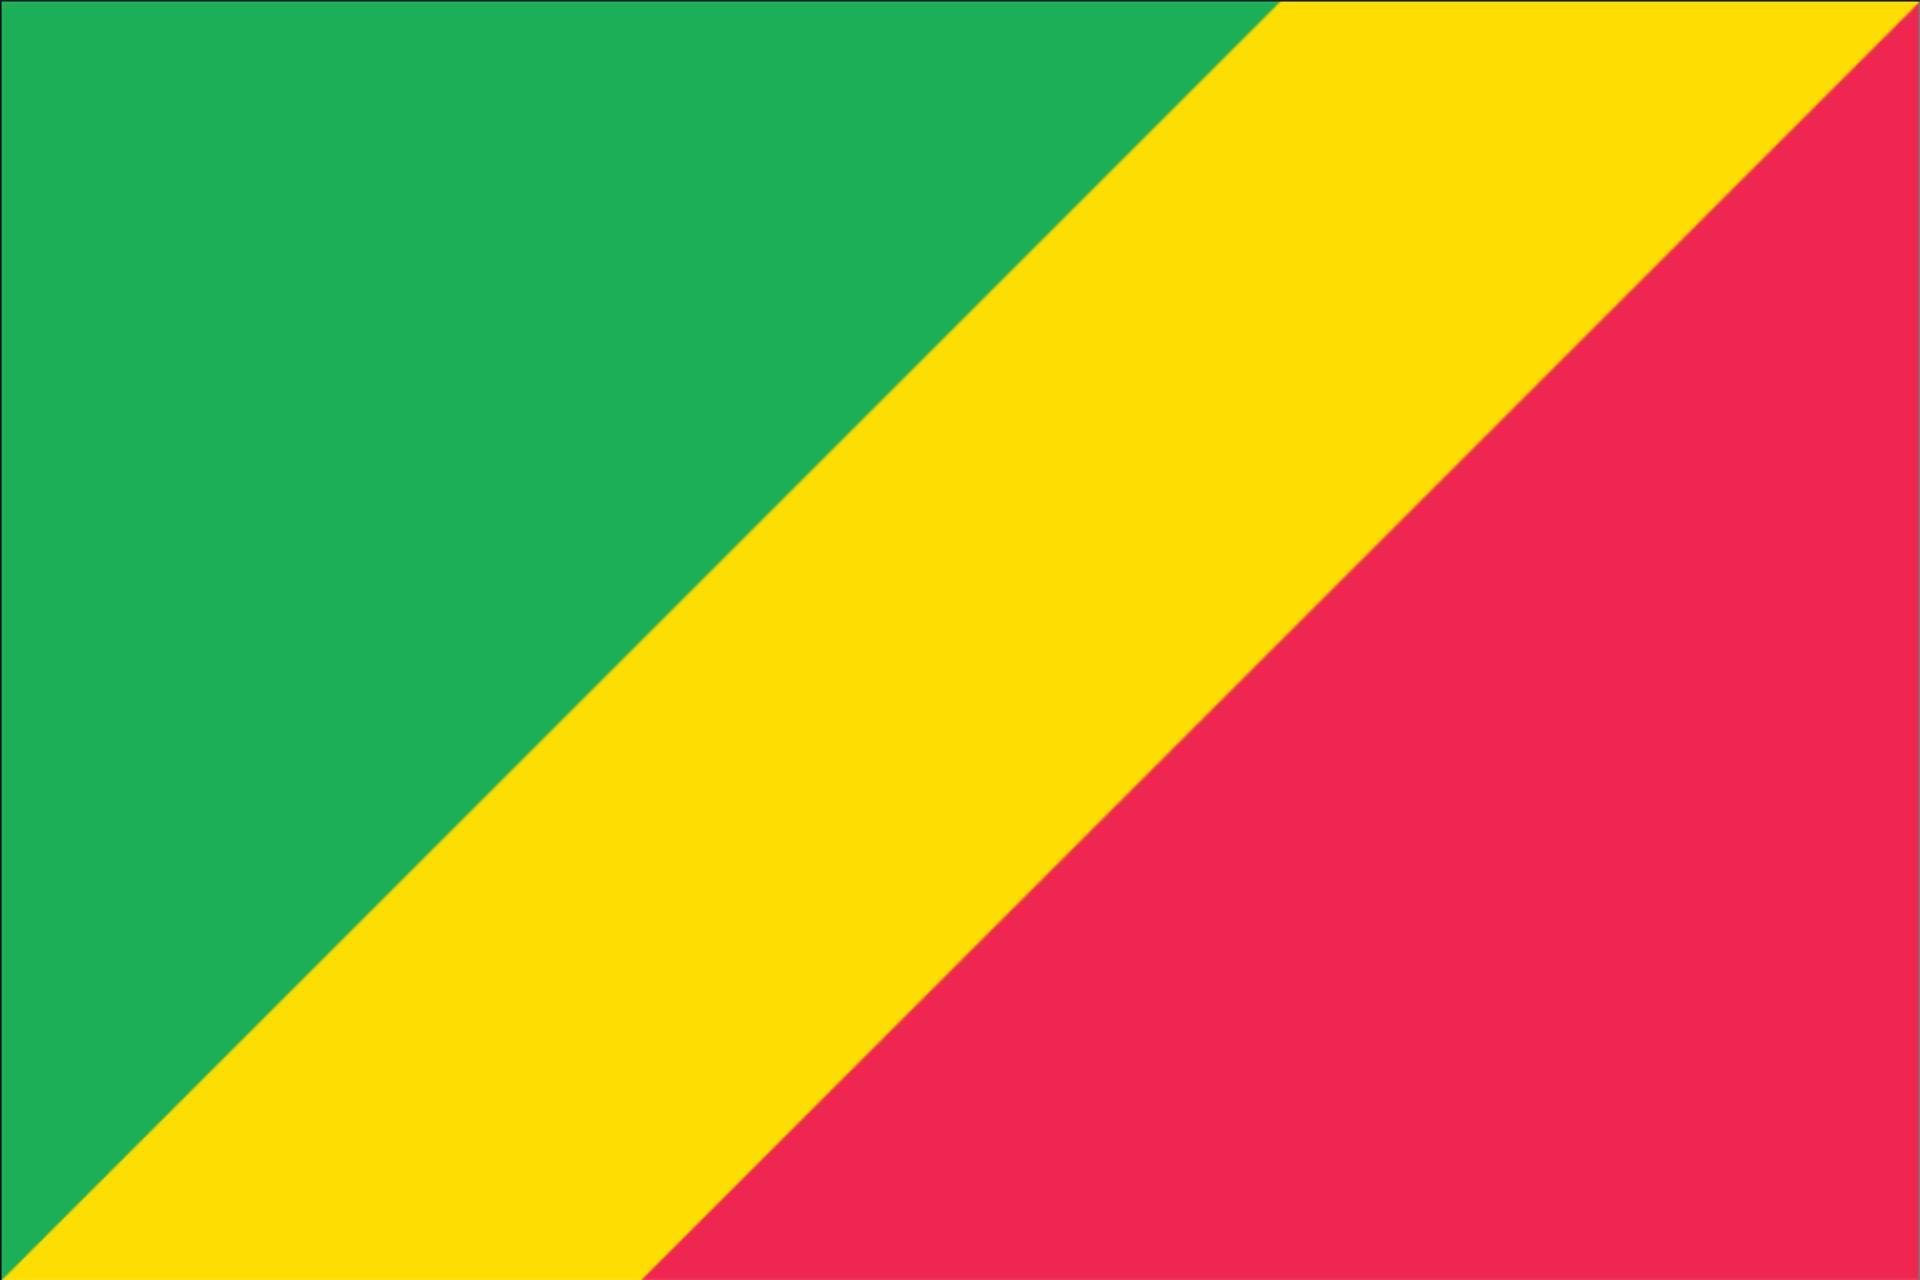 Querformat g/m² Kongo flaggenmeer Flagge 110 Flagge (Republik)